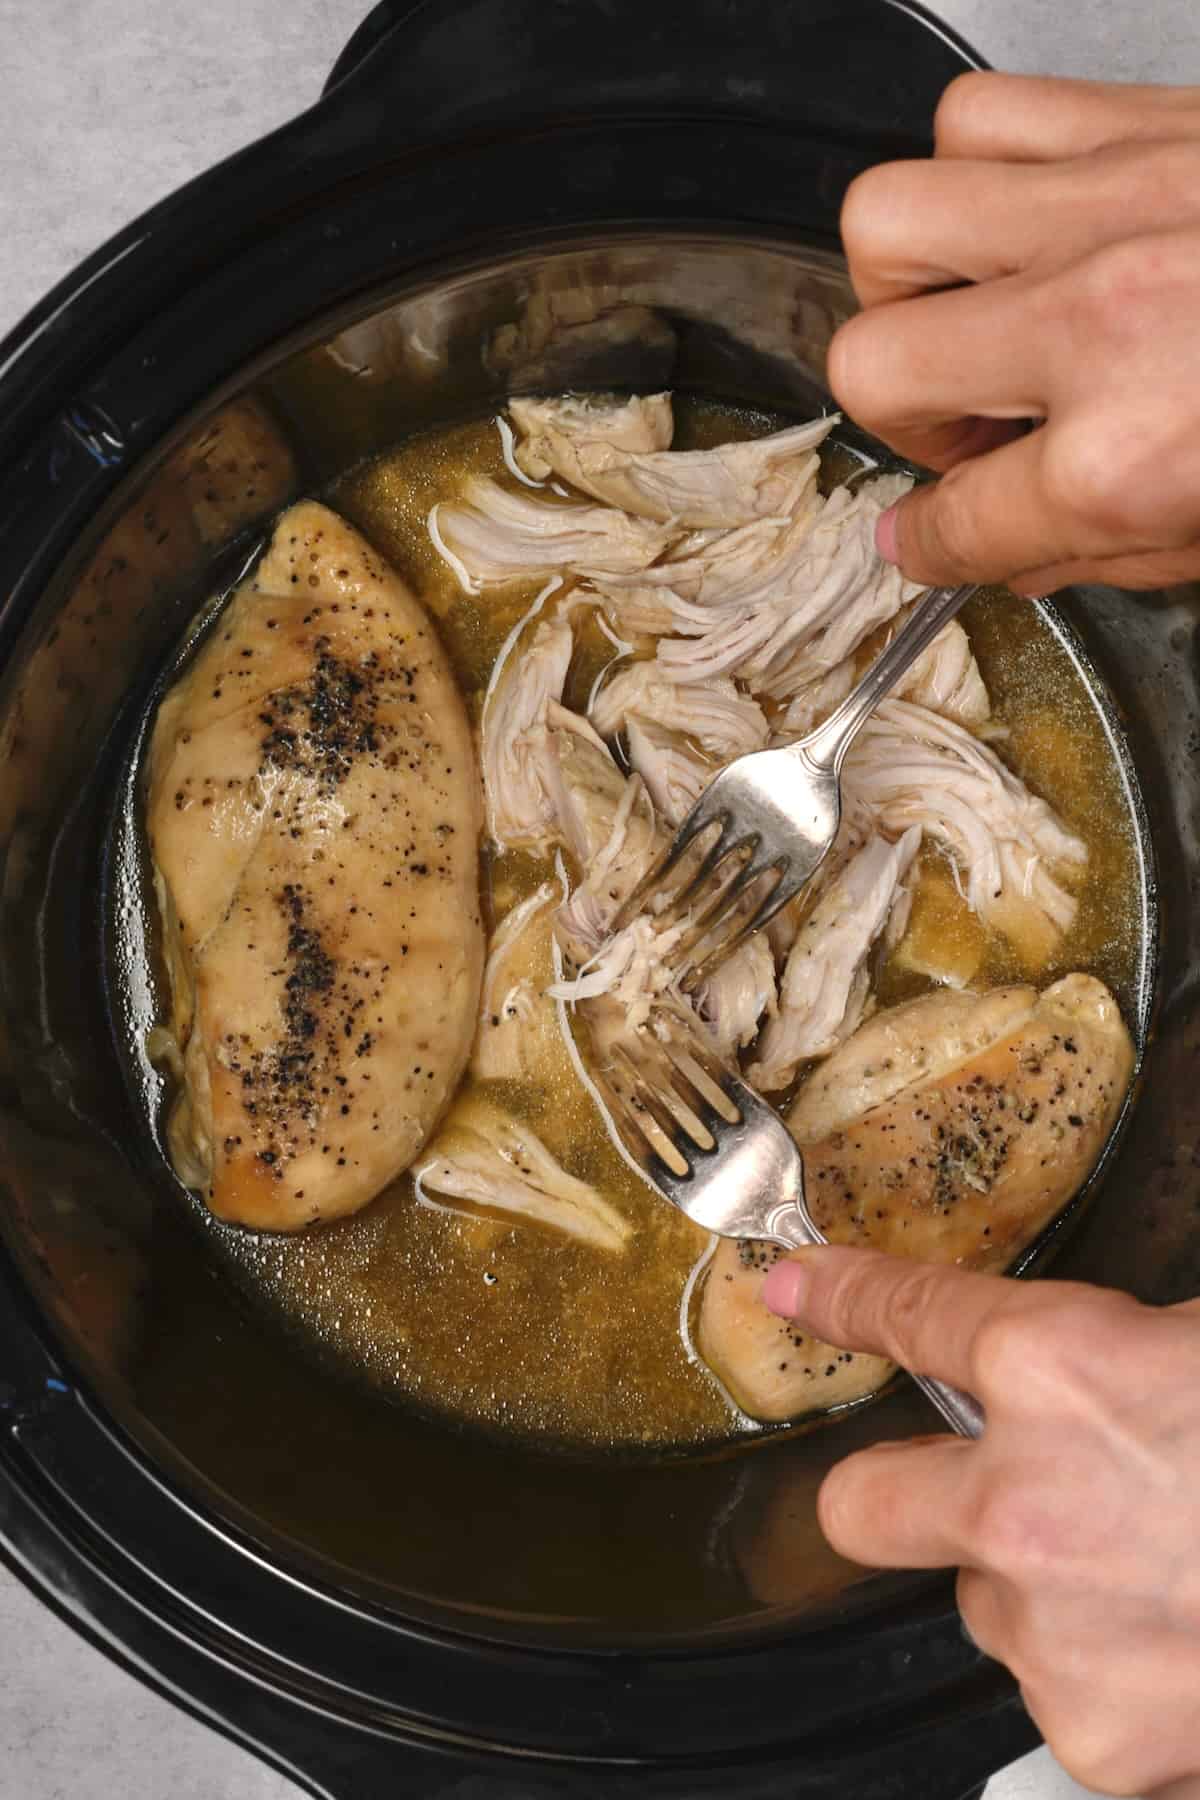 Shredding crockpot chicken with forks